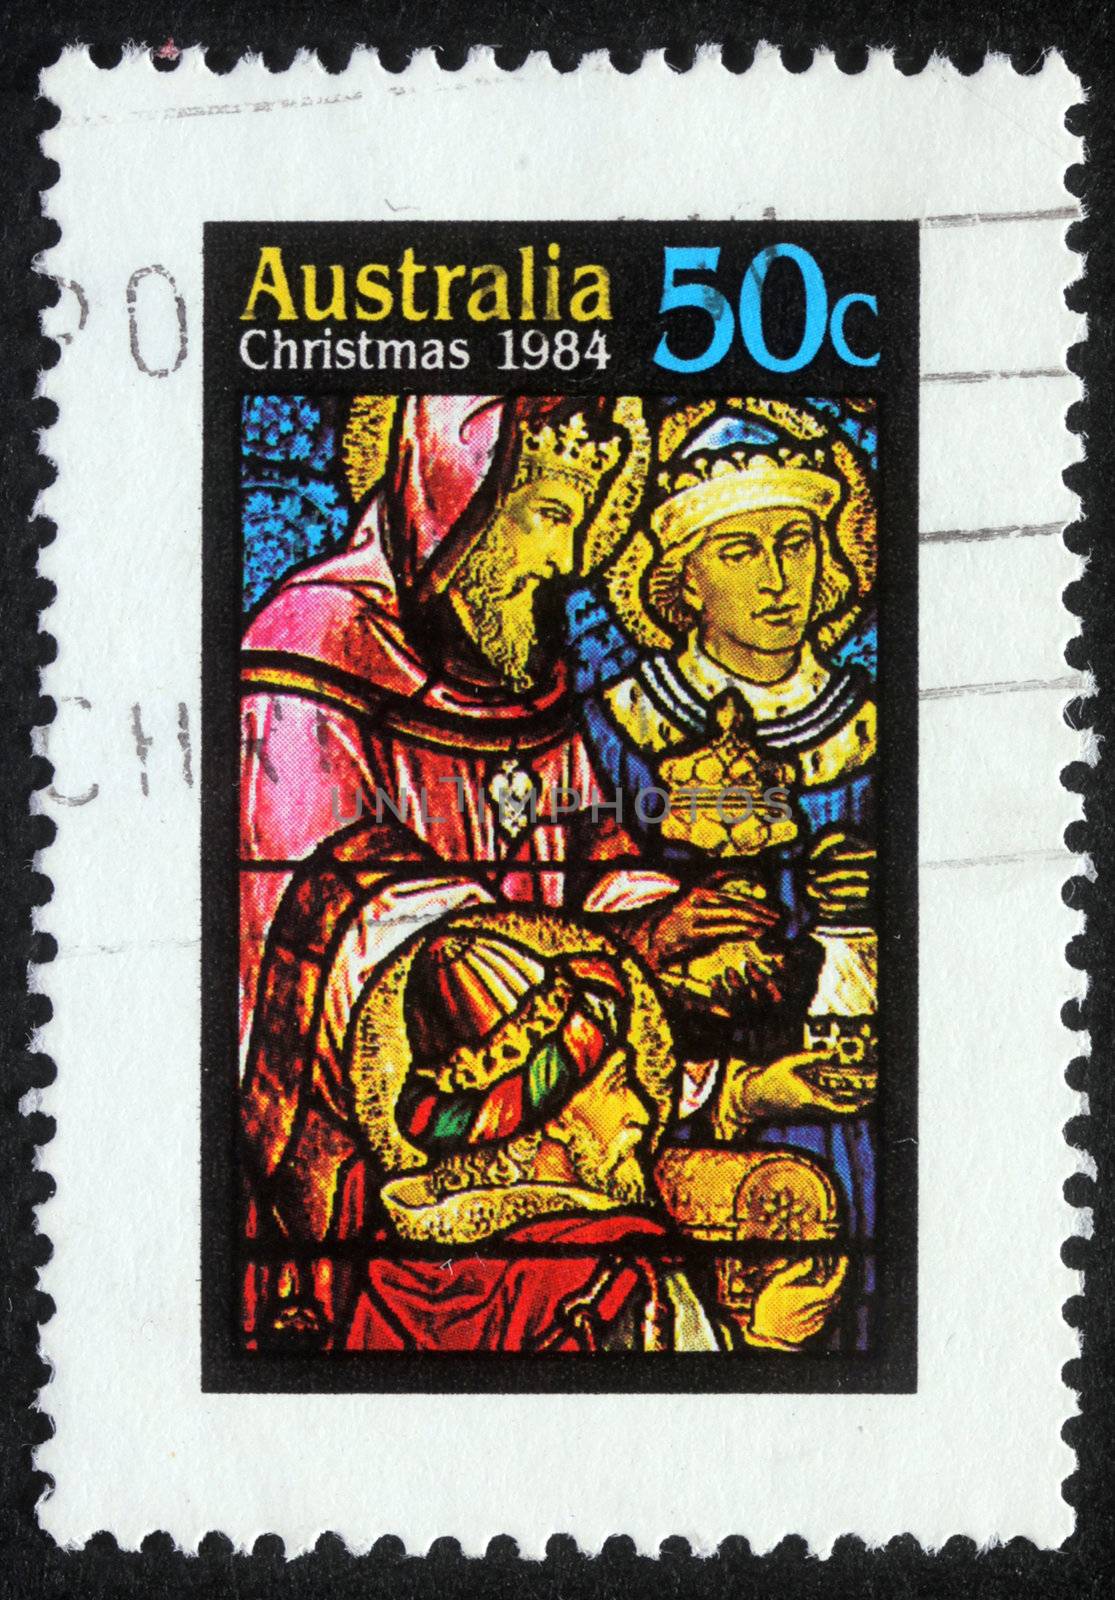 AUSTRALIA - CIRCA 1984: A greeting Christmas stamp printed in Australia shows birth of Jesus Christ, adoration of the Magi